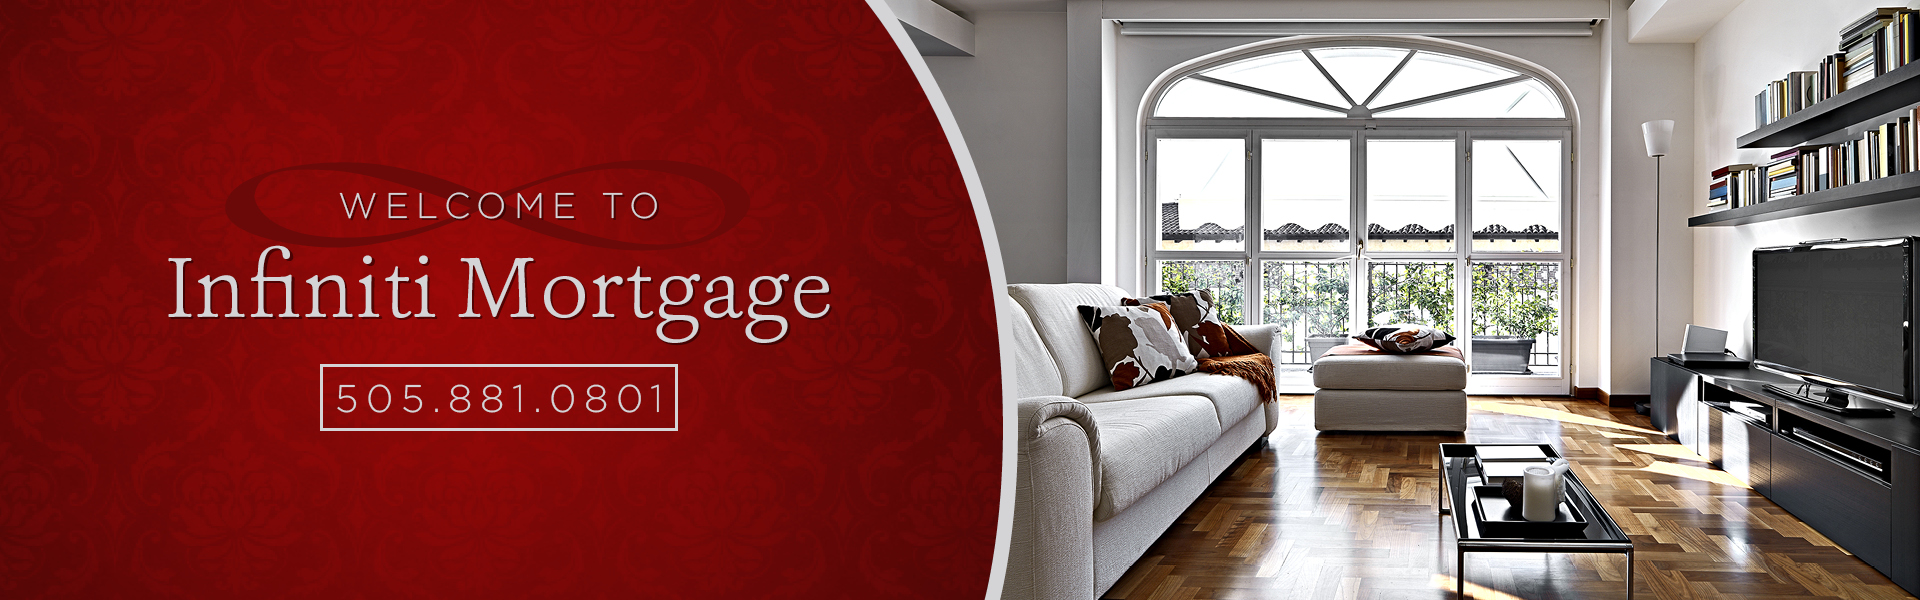 Image of Infiniti Mortgage VA home loan page banner